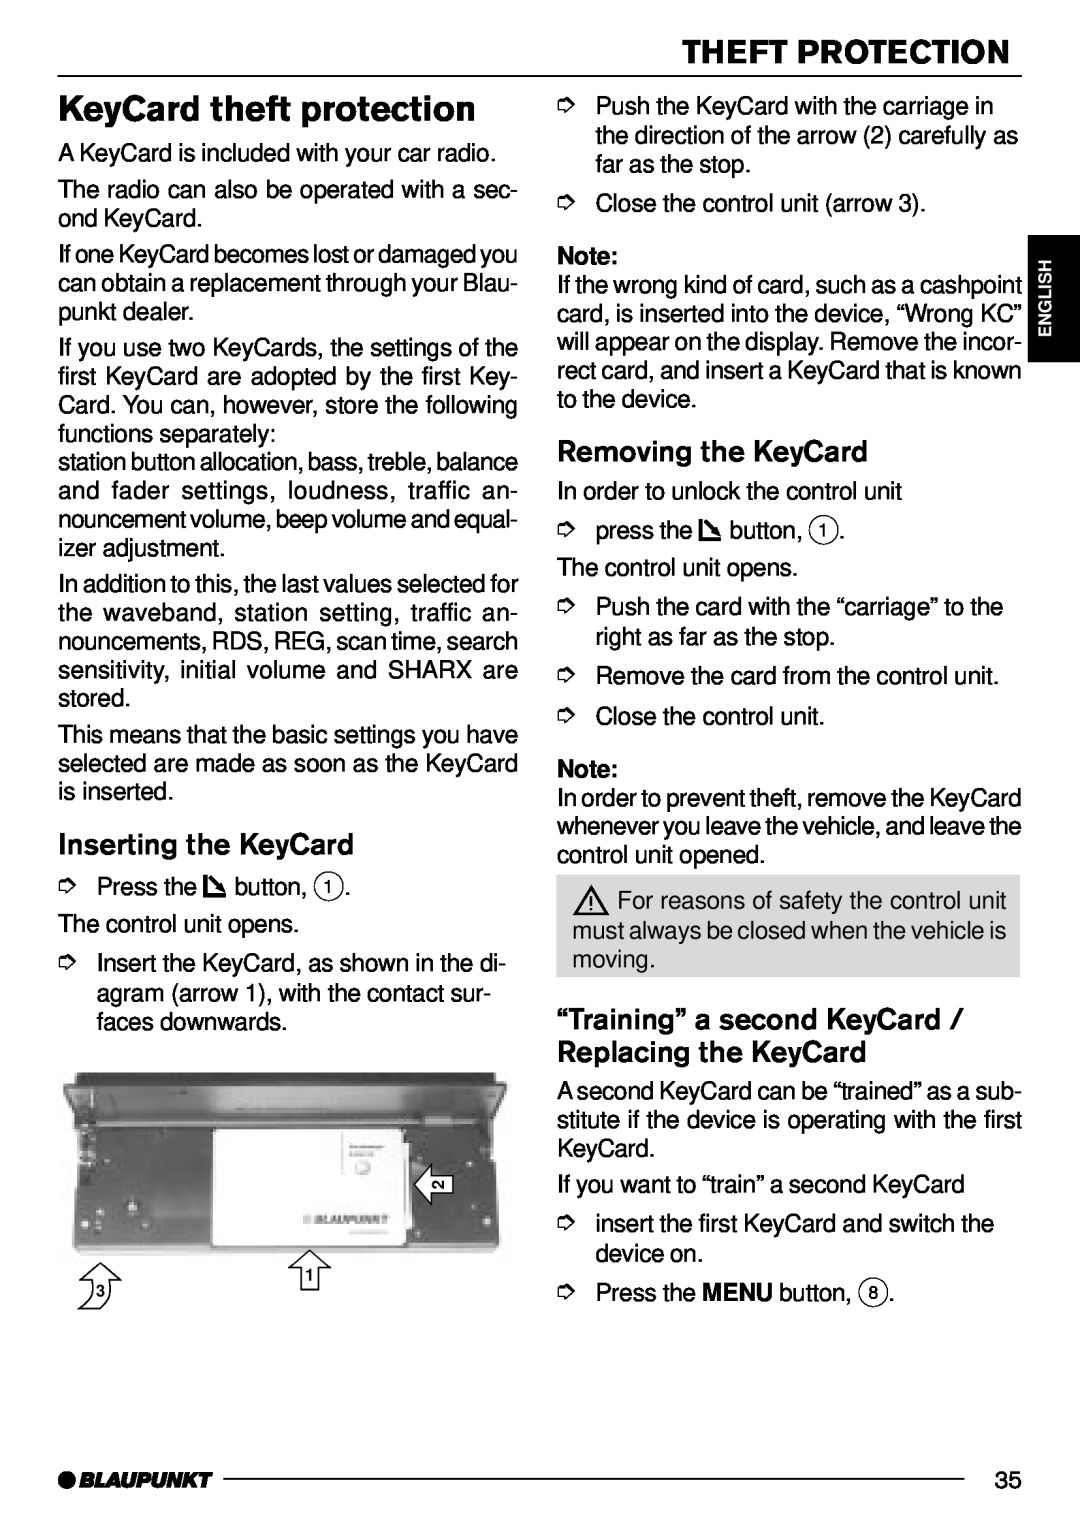 Blaupunkt Phoenix CD70 KeyCard theft protection, Theft Protection, Inserting the KeyCard, Removing the KeyCard 